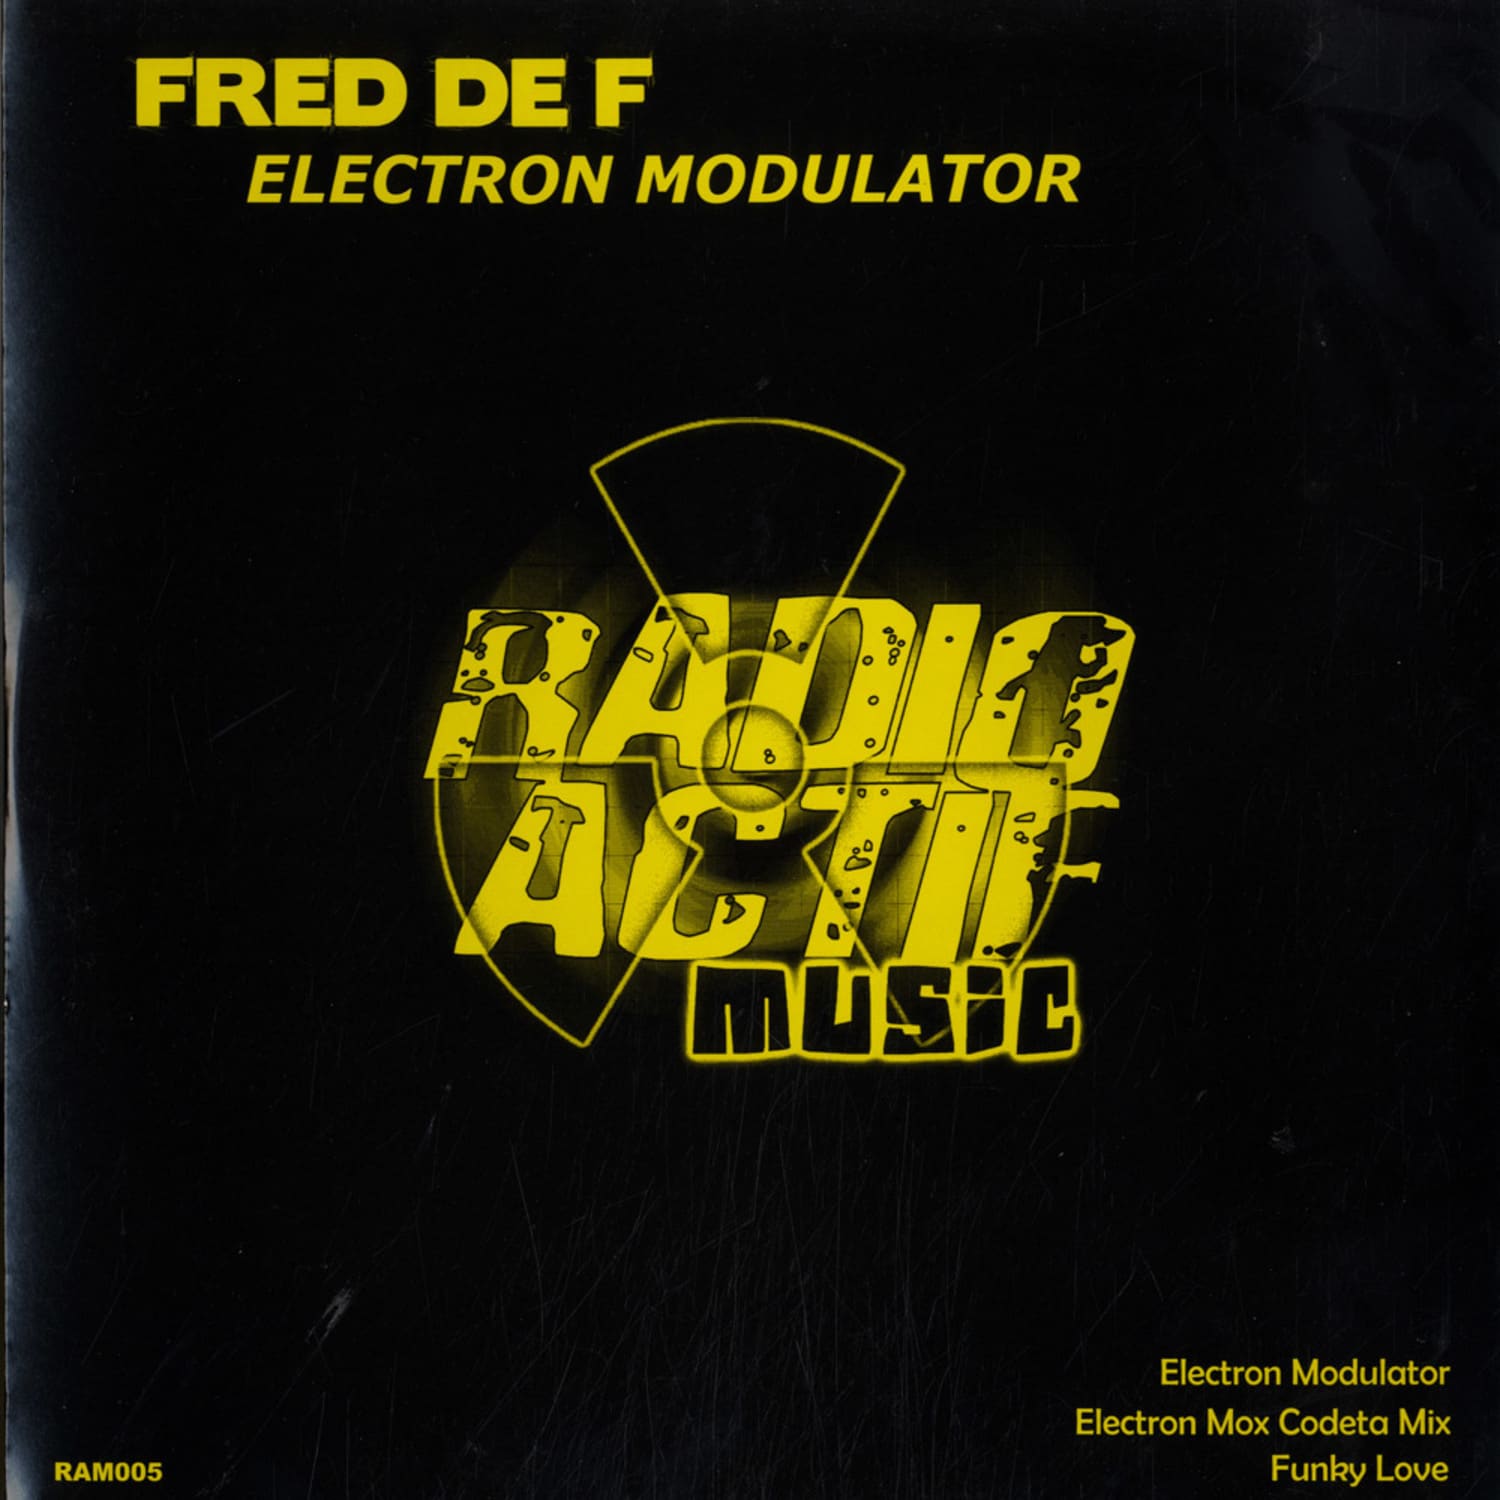 Fred de F - ELECTRON MODULATOR